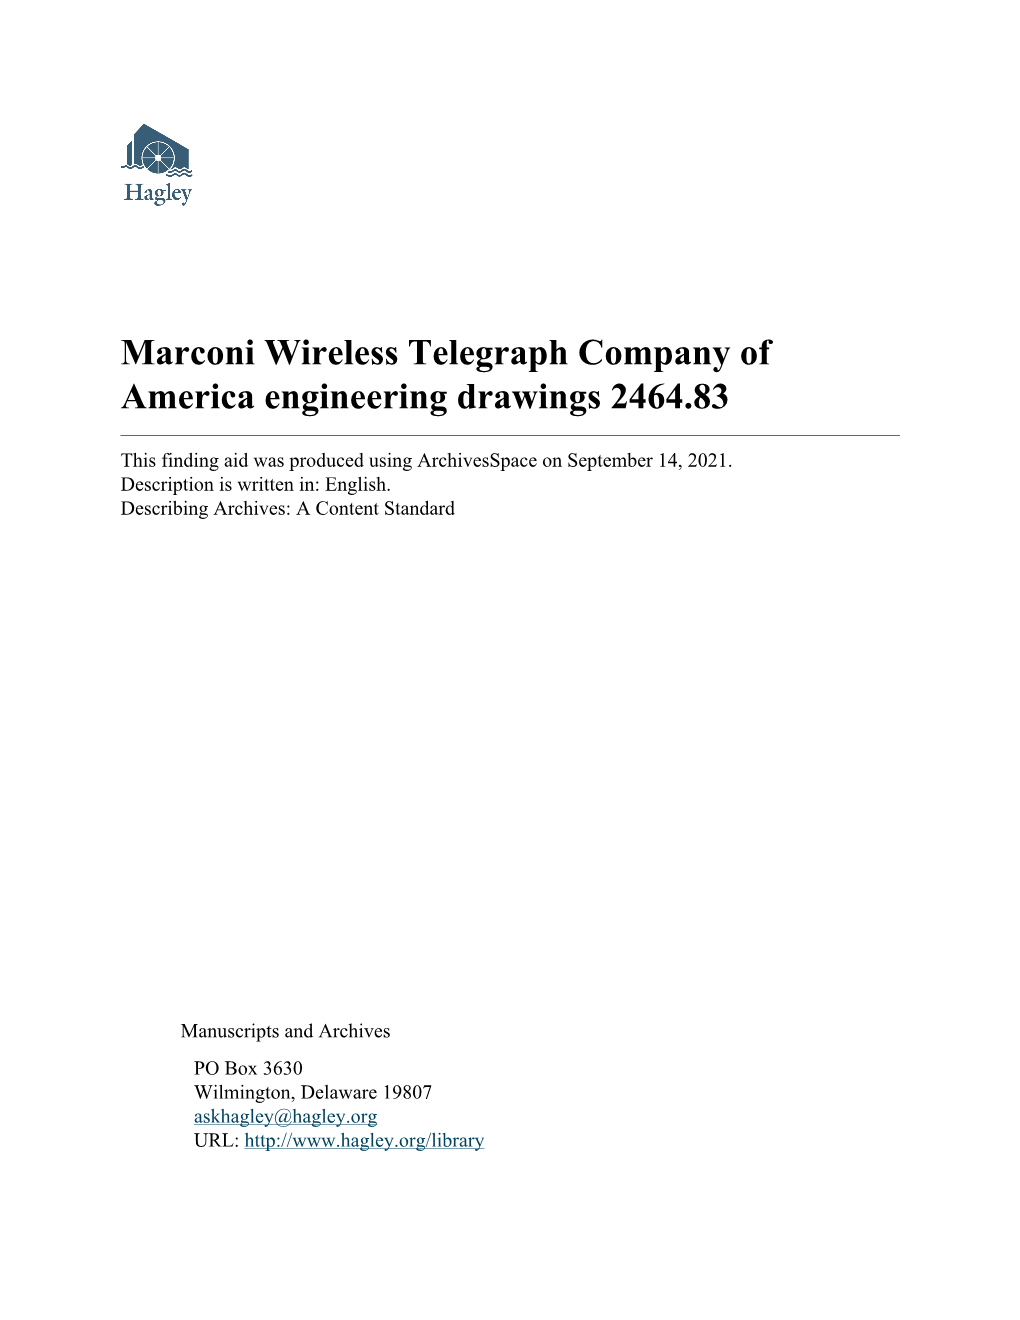 Marconi Wireless Telegraph Company of America Engineering Drawings 2464.83